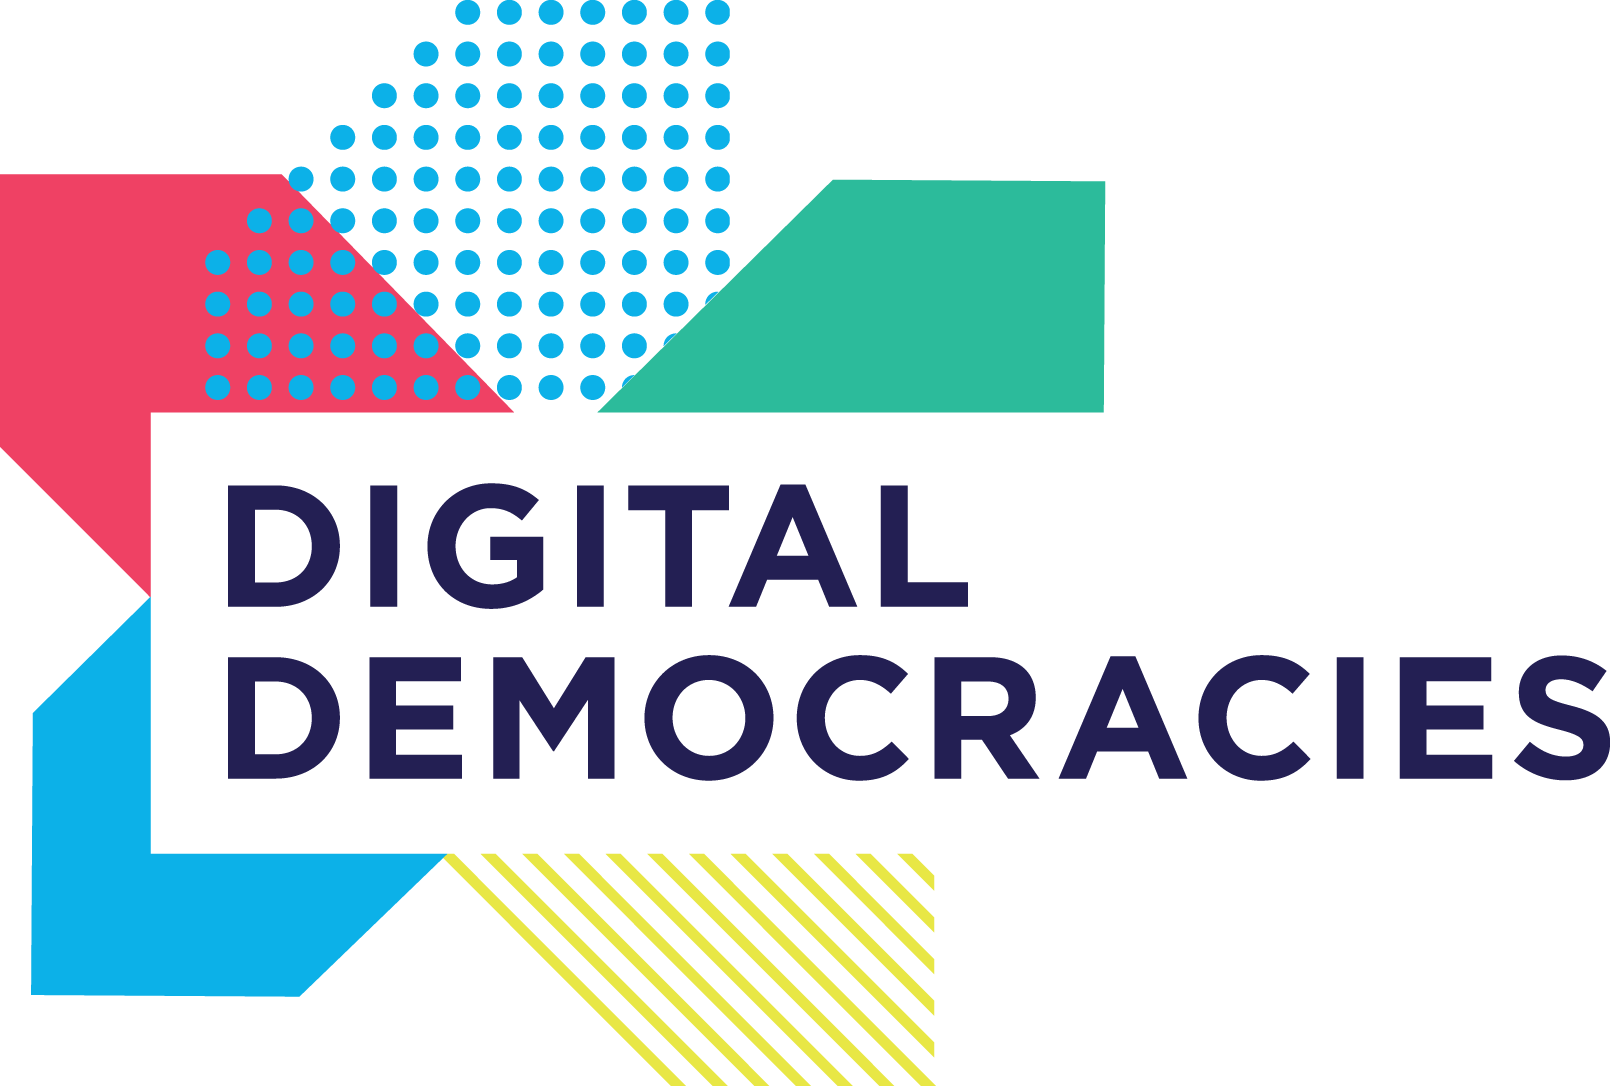 Digital Democracies logo